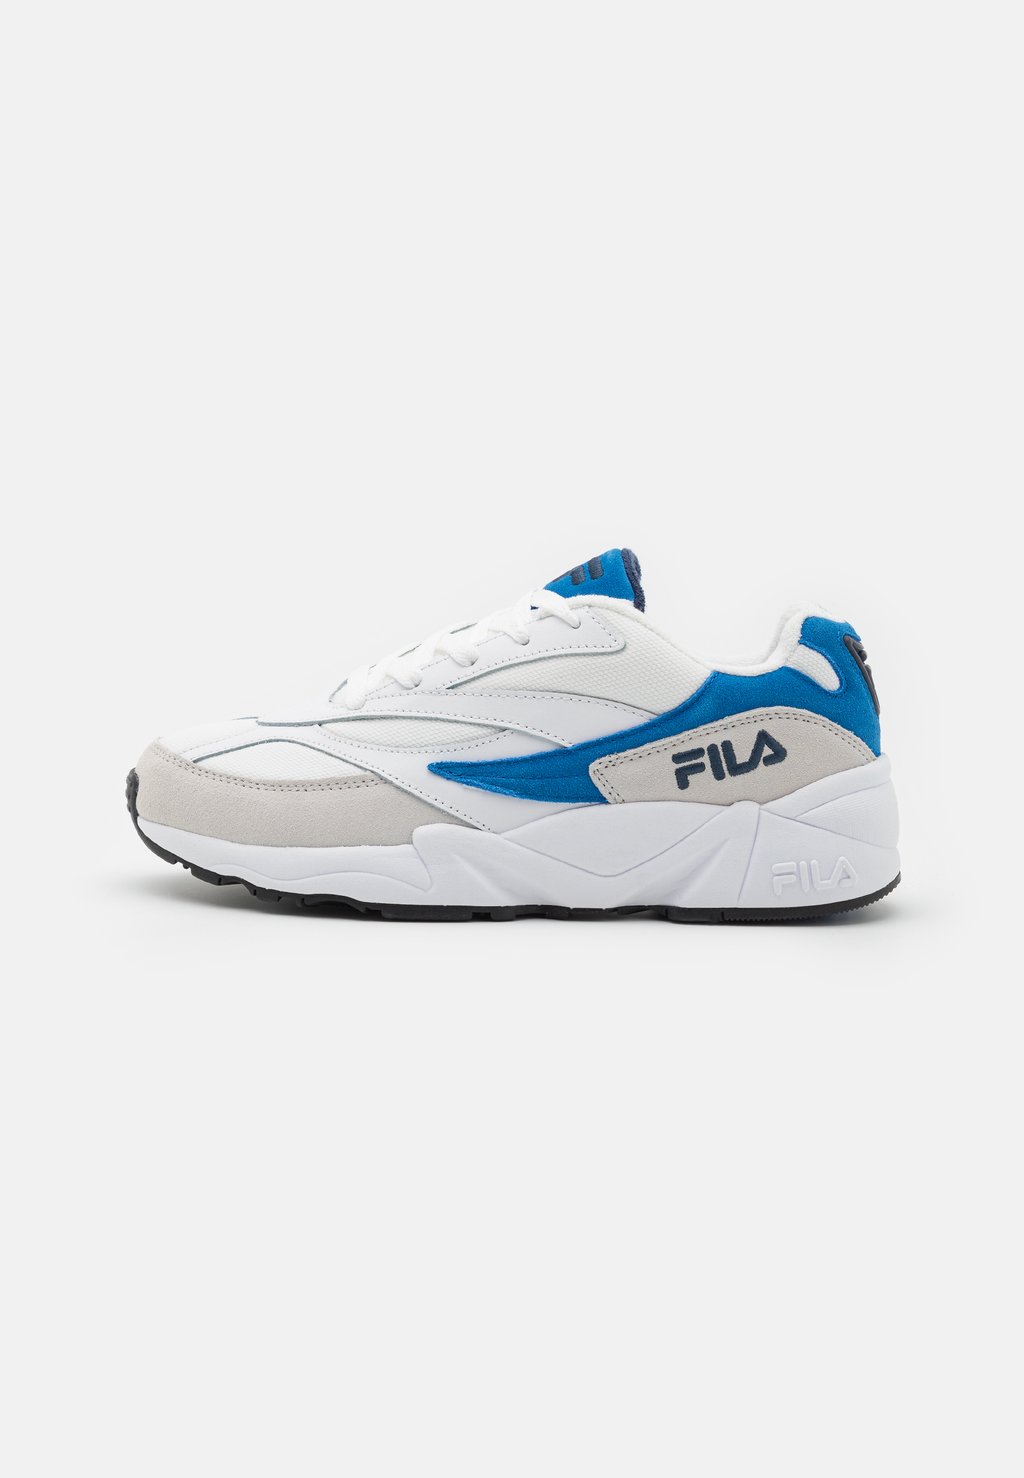 Низкие кроссовки V94 Fila, цвет white/prime blue